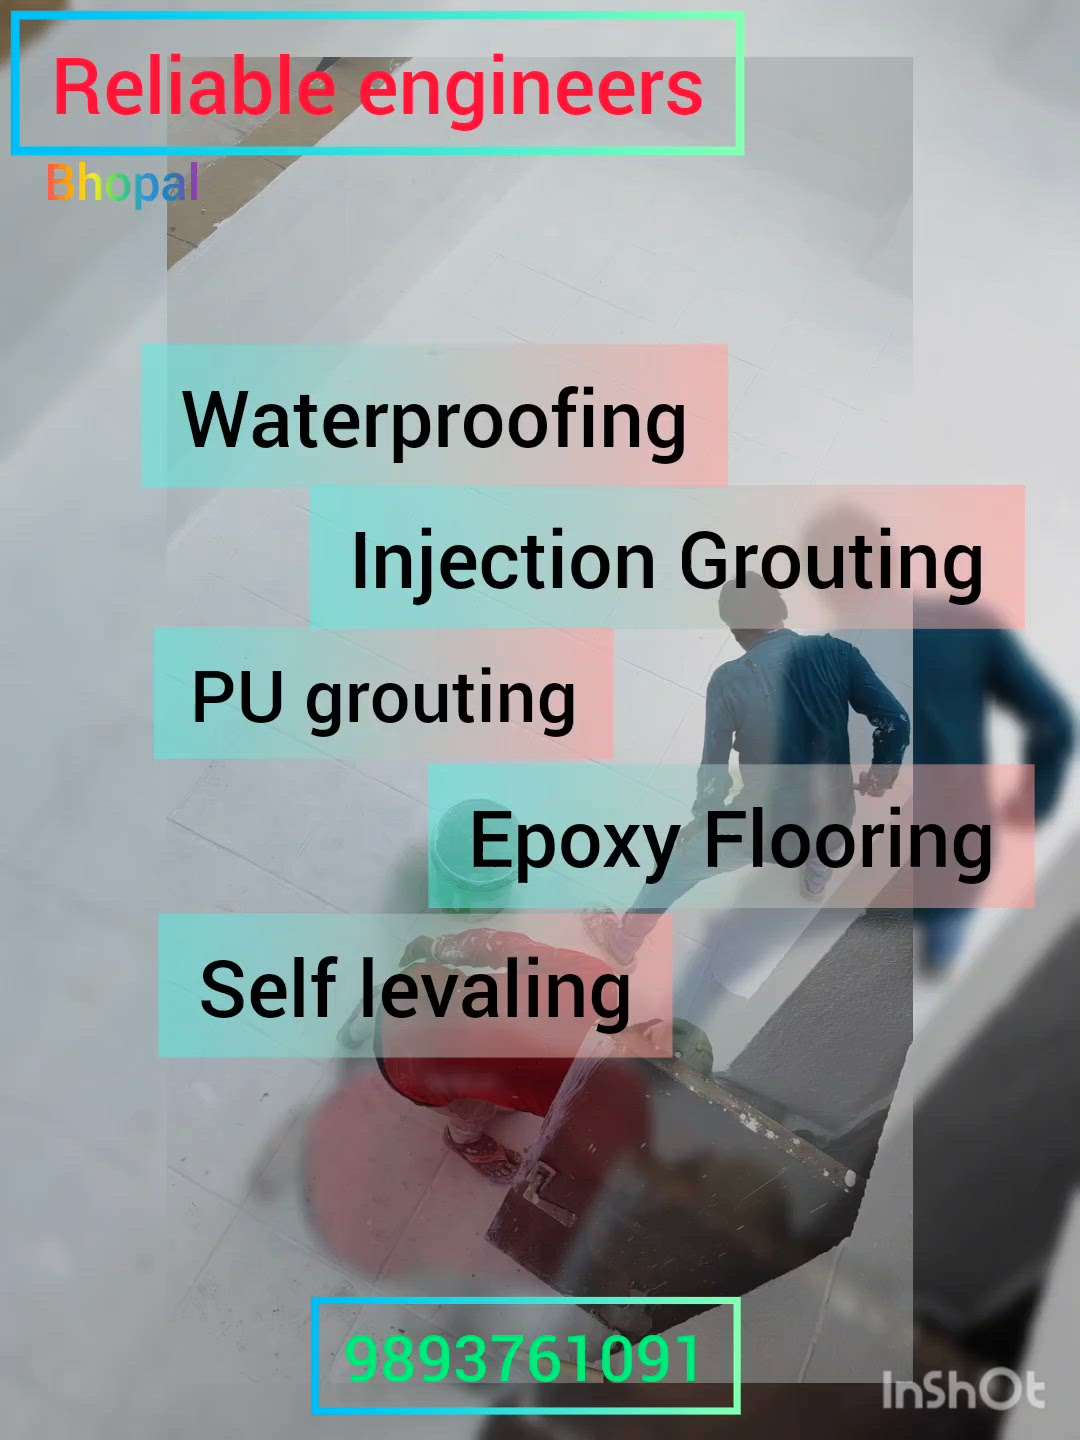 waterproofing roofshild with MYK arment white rubber coating #WaterProofings  #WaterProofing  #Water_Proofing  #terracewaterproofing  #MixedRoofHouse  #HouseDesigns  #BuildingSupplies  #bhopalproperty   #bhopalduplex  #bhopal  #CivilEngineer  #Contractor  #engineers  #Architect  #architecturedesigns  #MixedRoofHouse  #FlatRoof  #DuplexHouse  #InteriorDesigner  #BathroomDesigns  #FlooringTiles  #BathroomRenovation  #TexturePainting  #asianpaint  #mykarment  #myk  #LivingRoomPainting  #FlooringTiles  #epoxycoating  #VinylFlooring  #WallPutty  #colorful  #terracewaterproofing